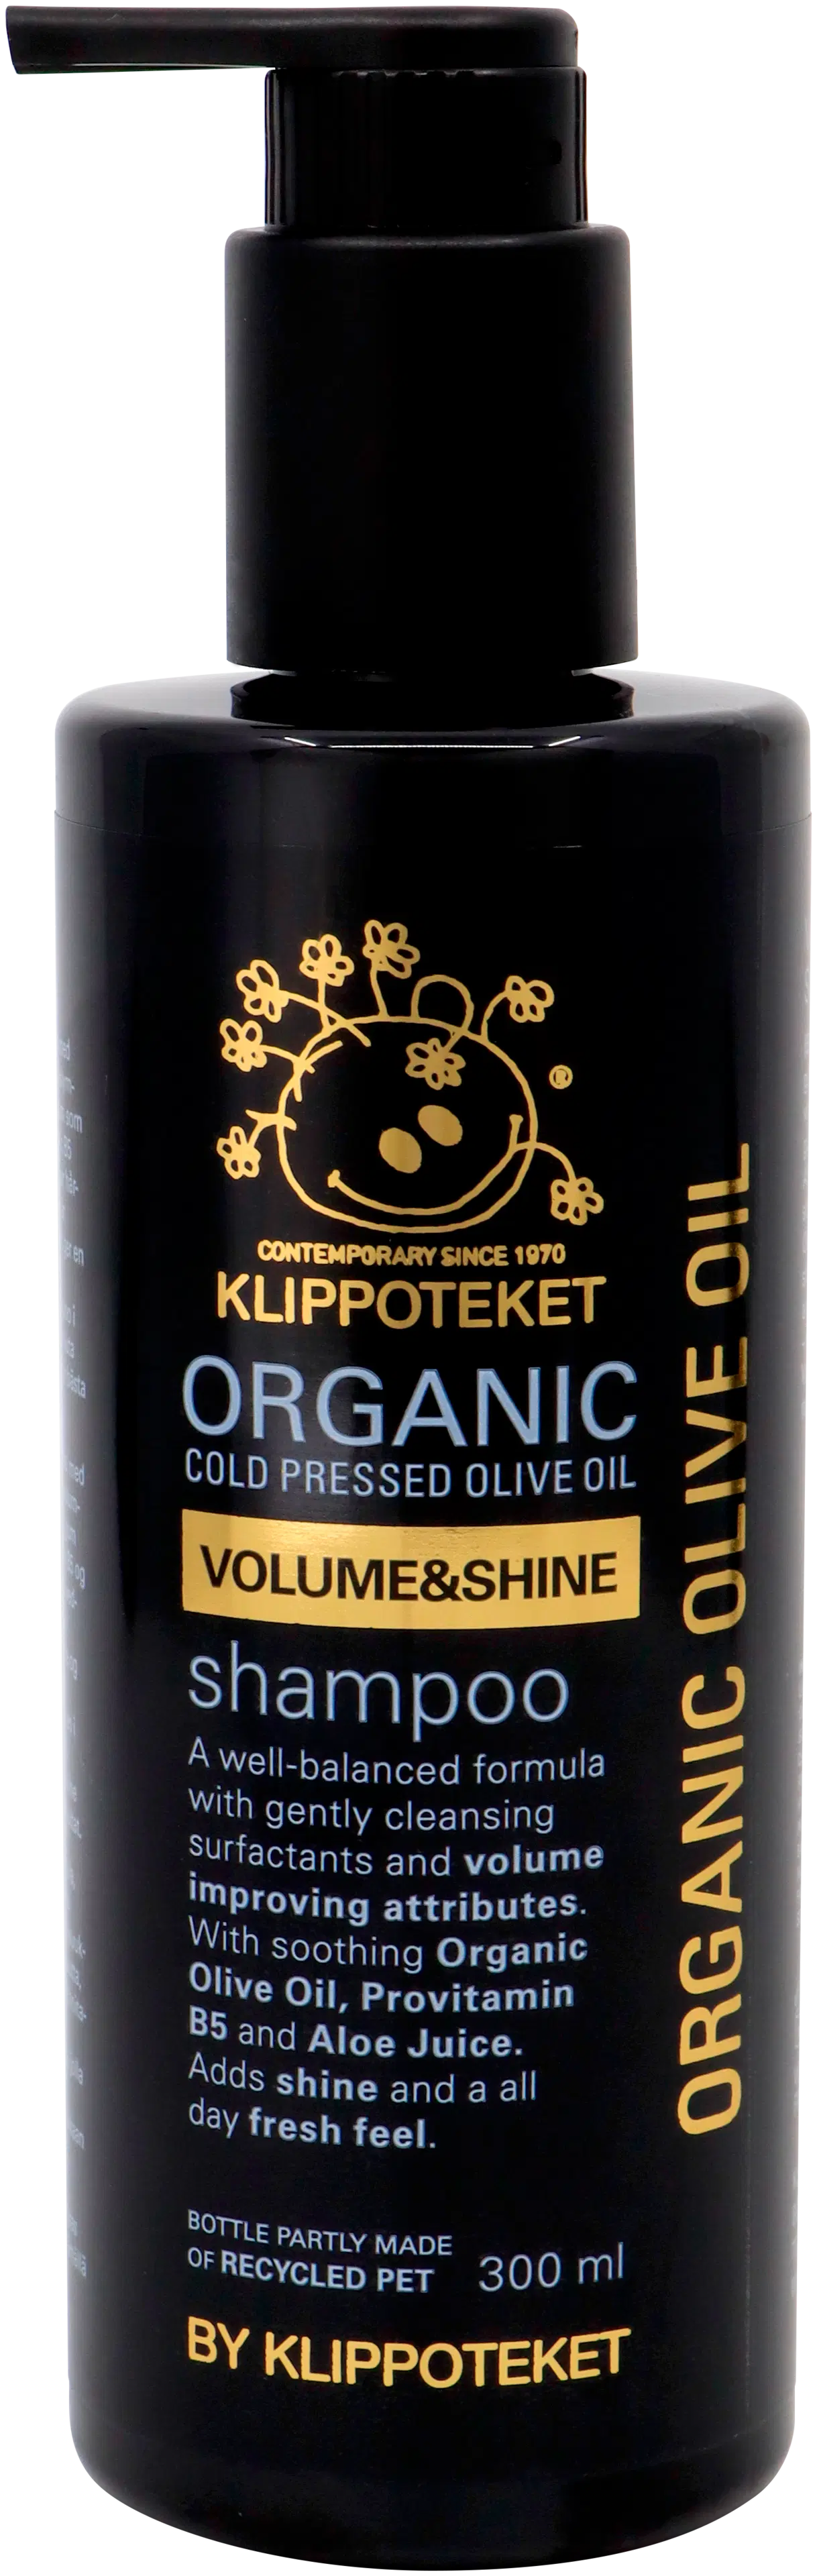 Klippoteket organic shampoo volume & shine 300 ml